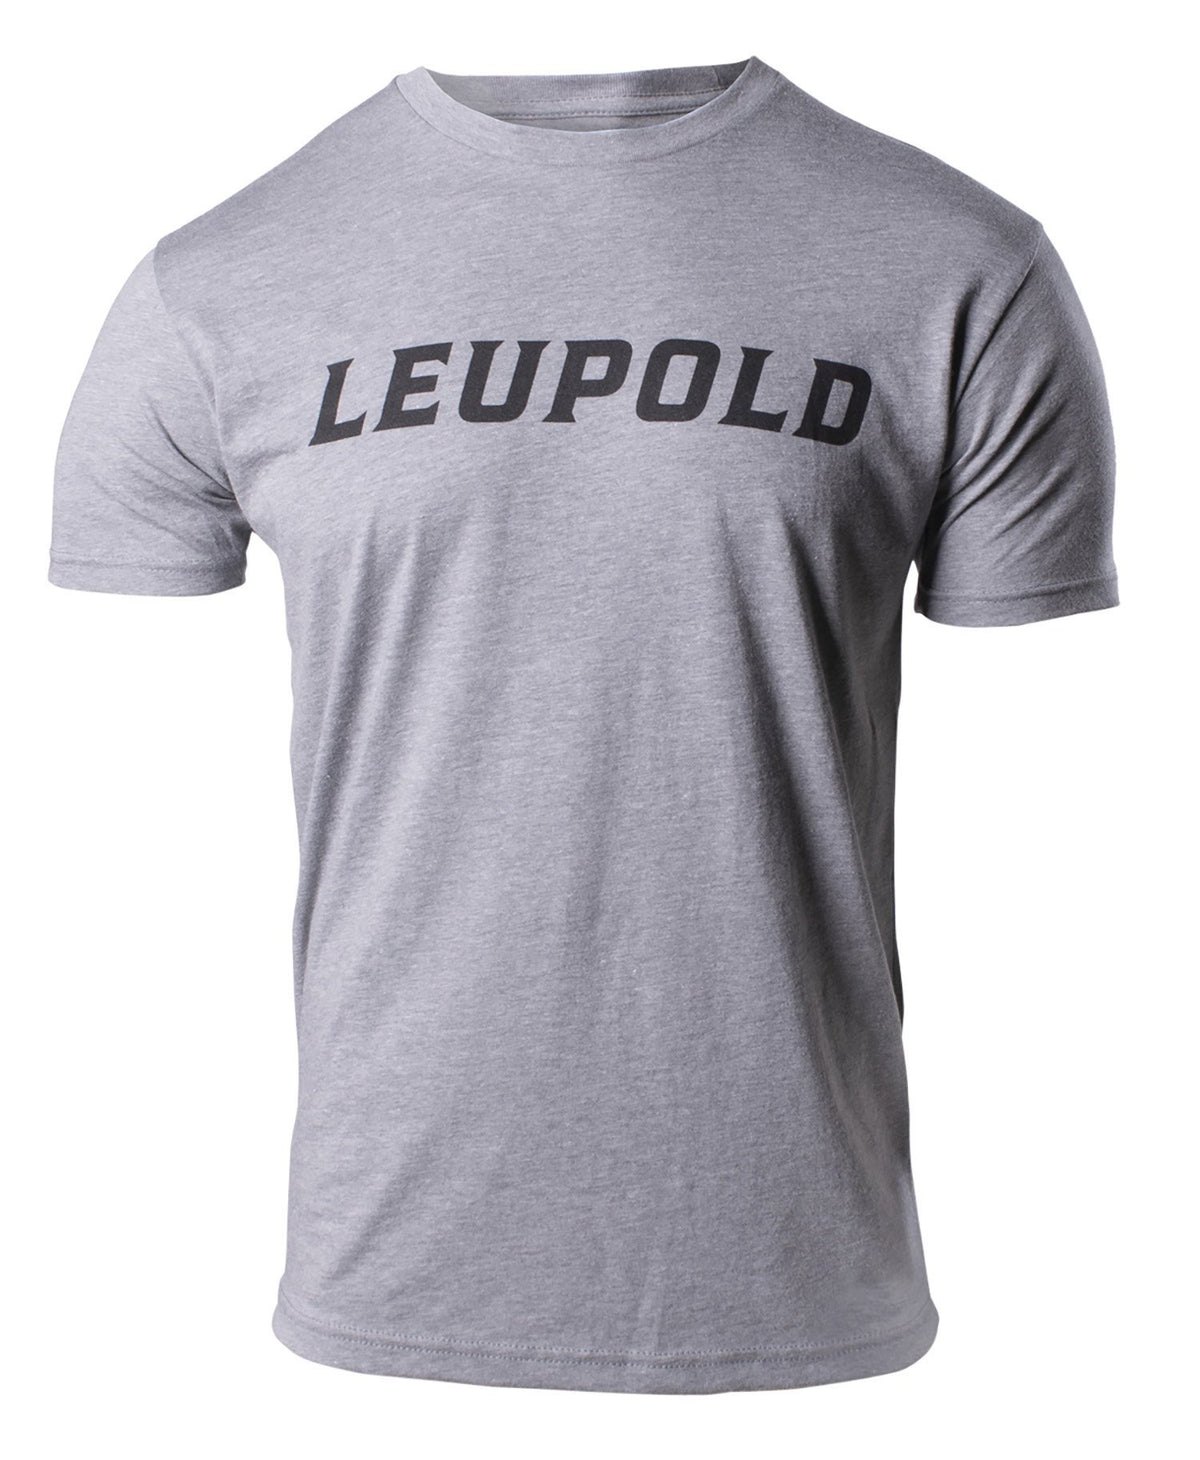 Leupold Wordmark T-Shirt Graphite Heather Large Short Sleeve - Pacific Flyway Supplies